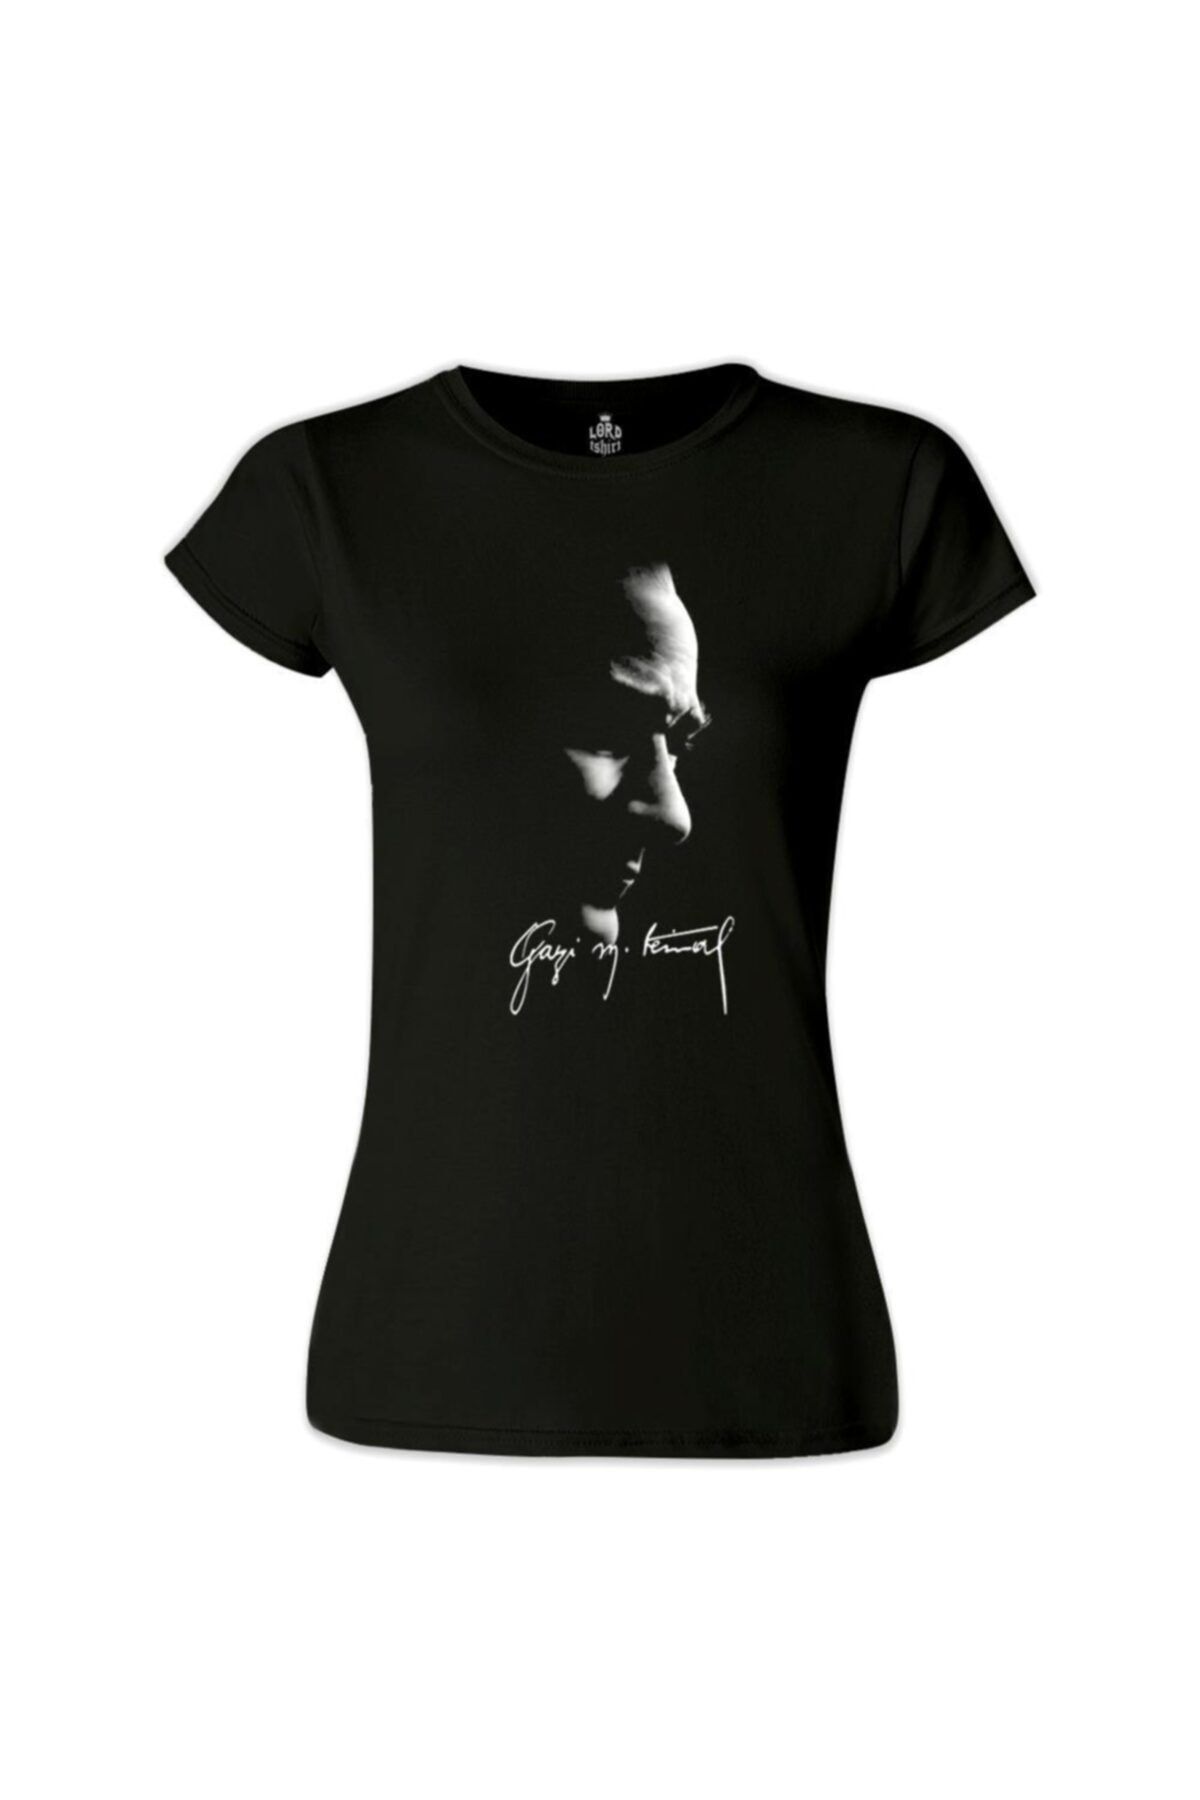 Lord T-Shirt Atatürk Gazi Imza Siyah  Kadın Tshirt